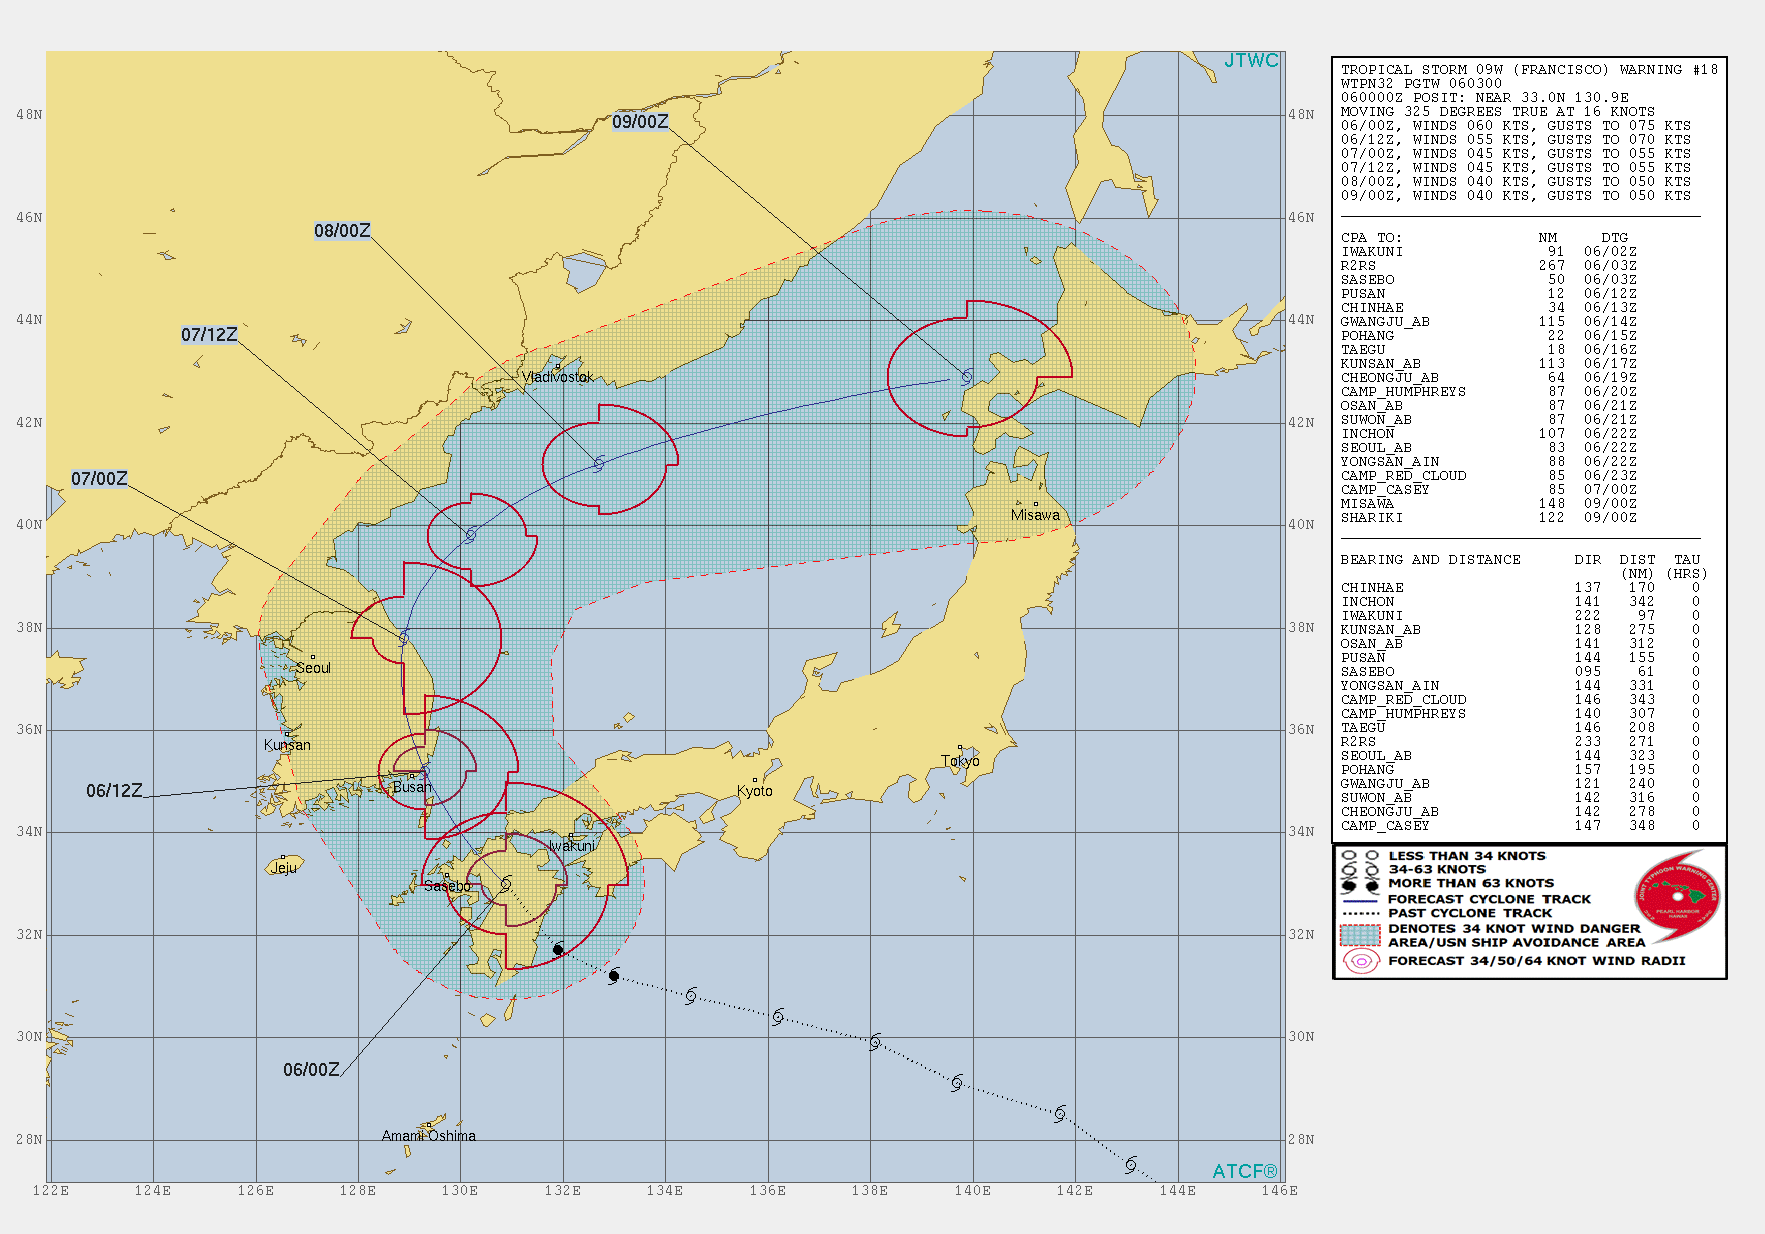 JTWC 台風8号 予想進路